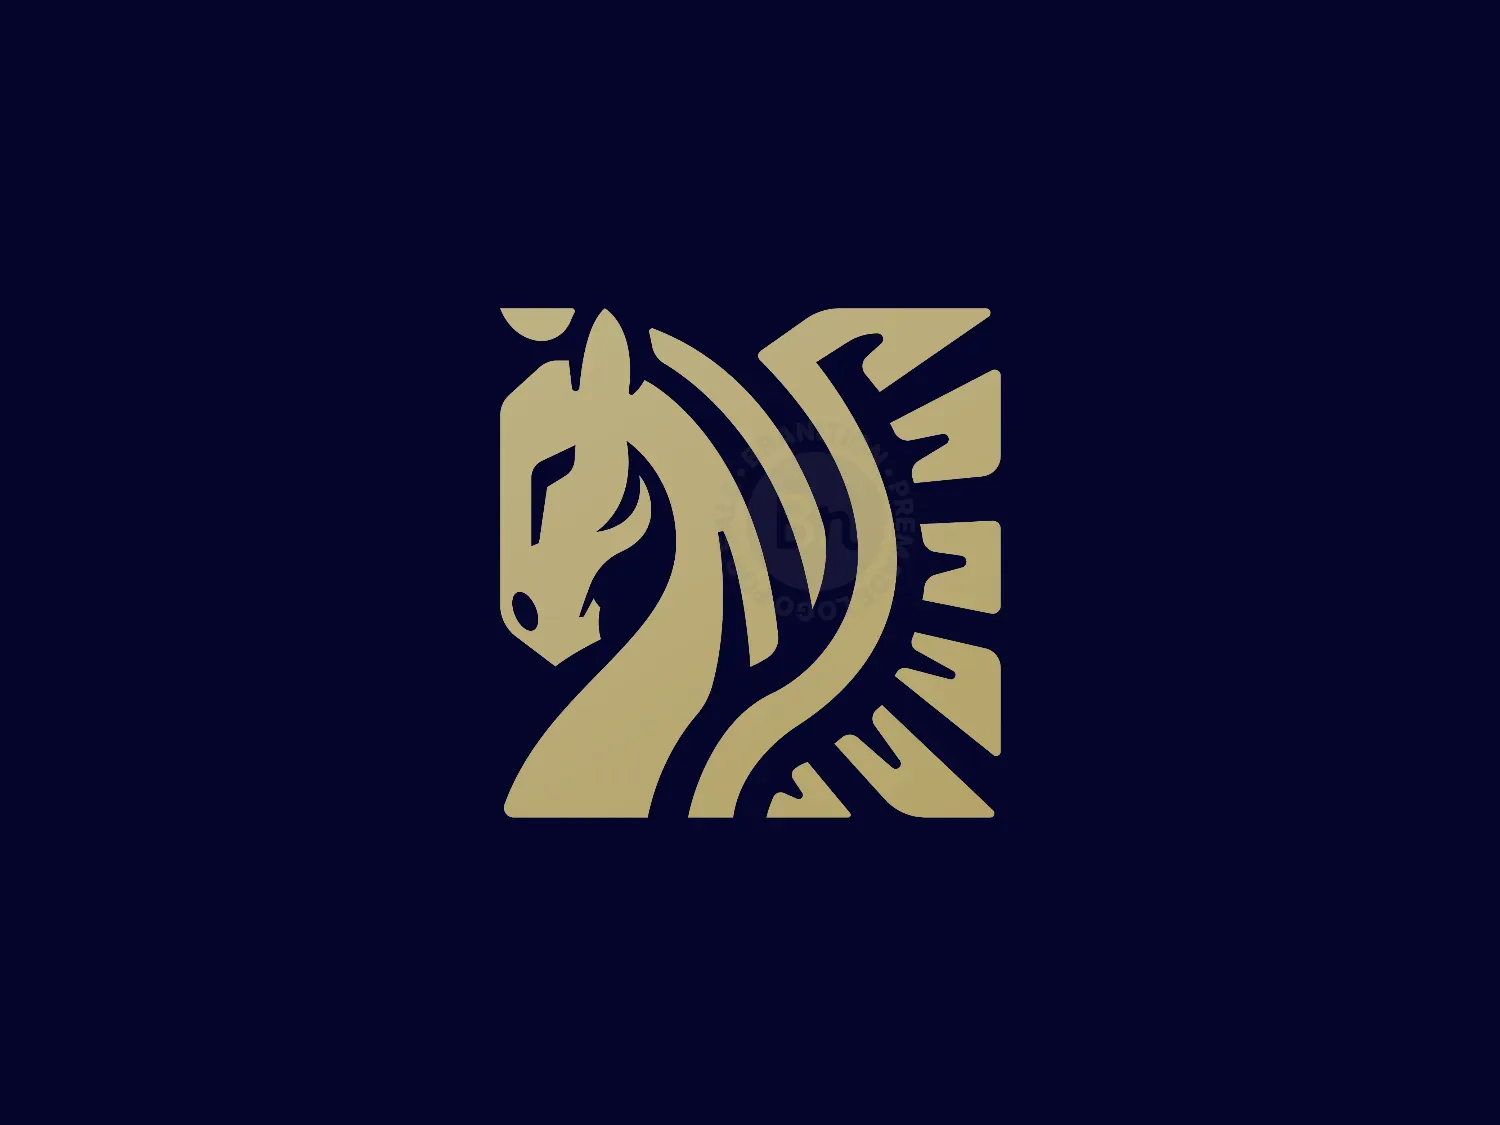 Abstract Pegasus Logo Silhouette Graphic by nipnoob · Creative Fabrica